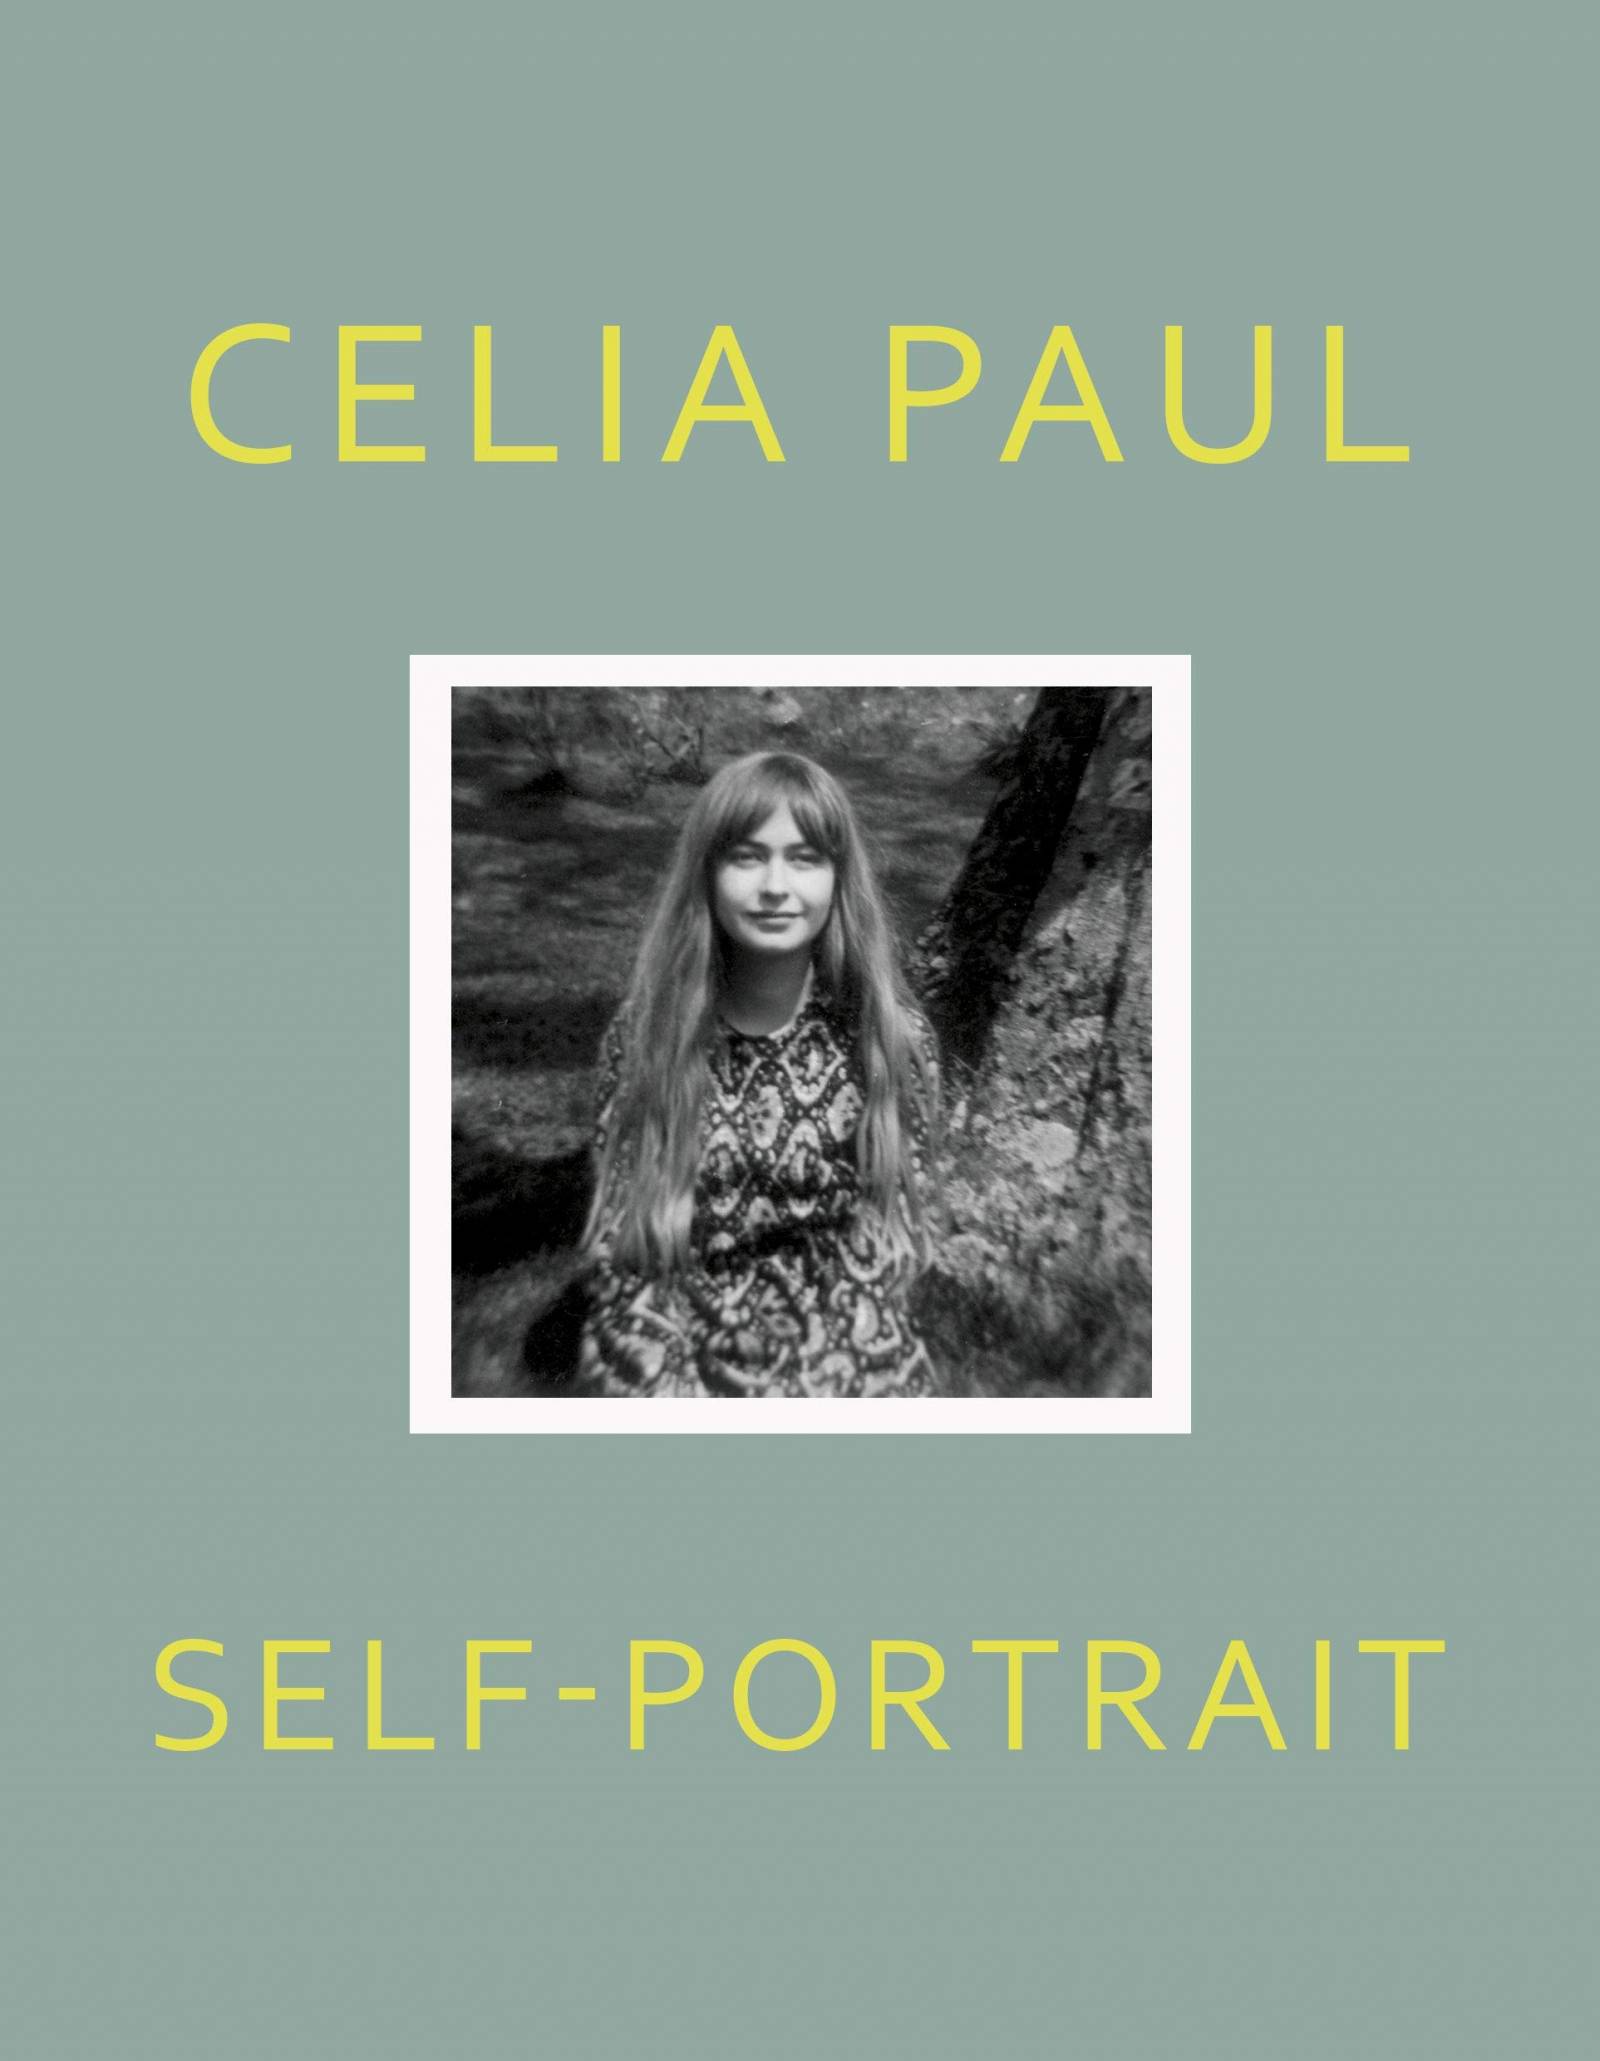 Celia Paul Self-Portrait (Fot. Materiały prasowe)